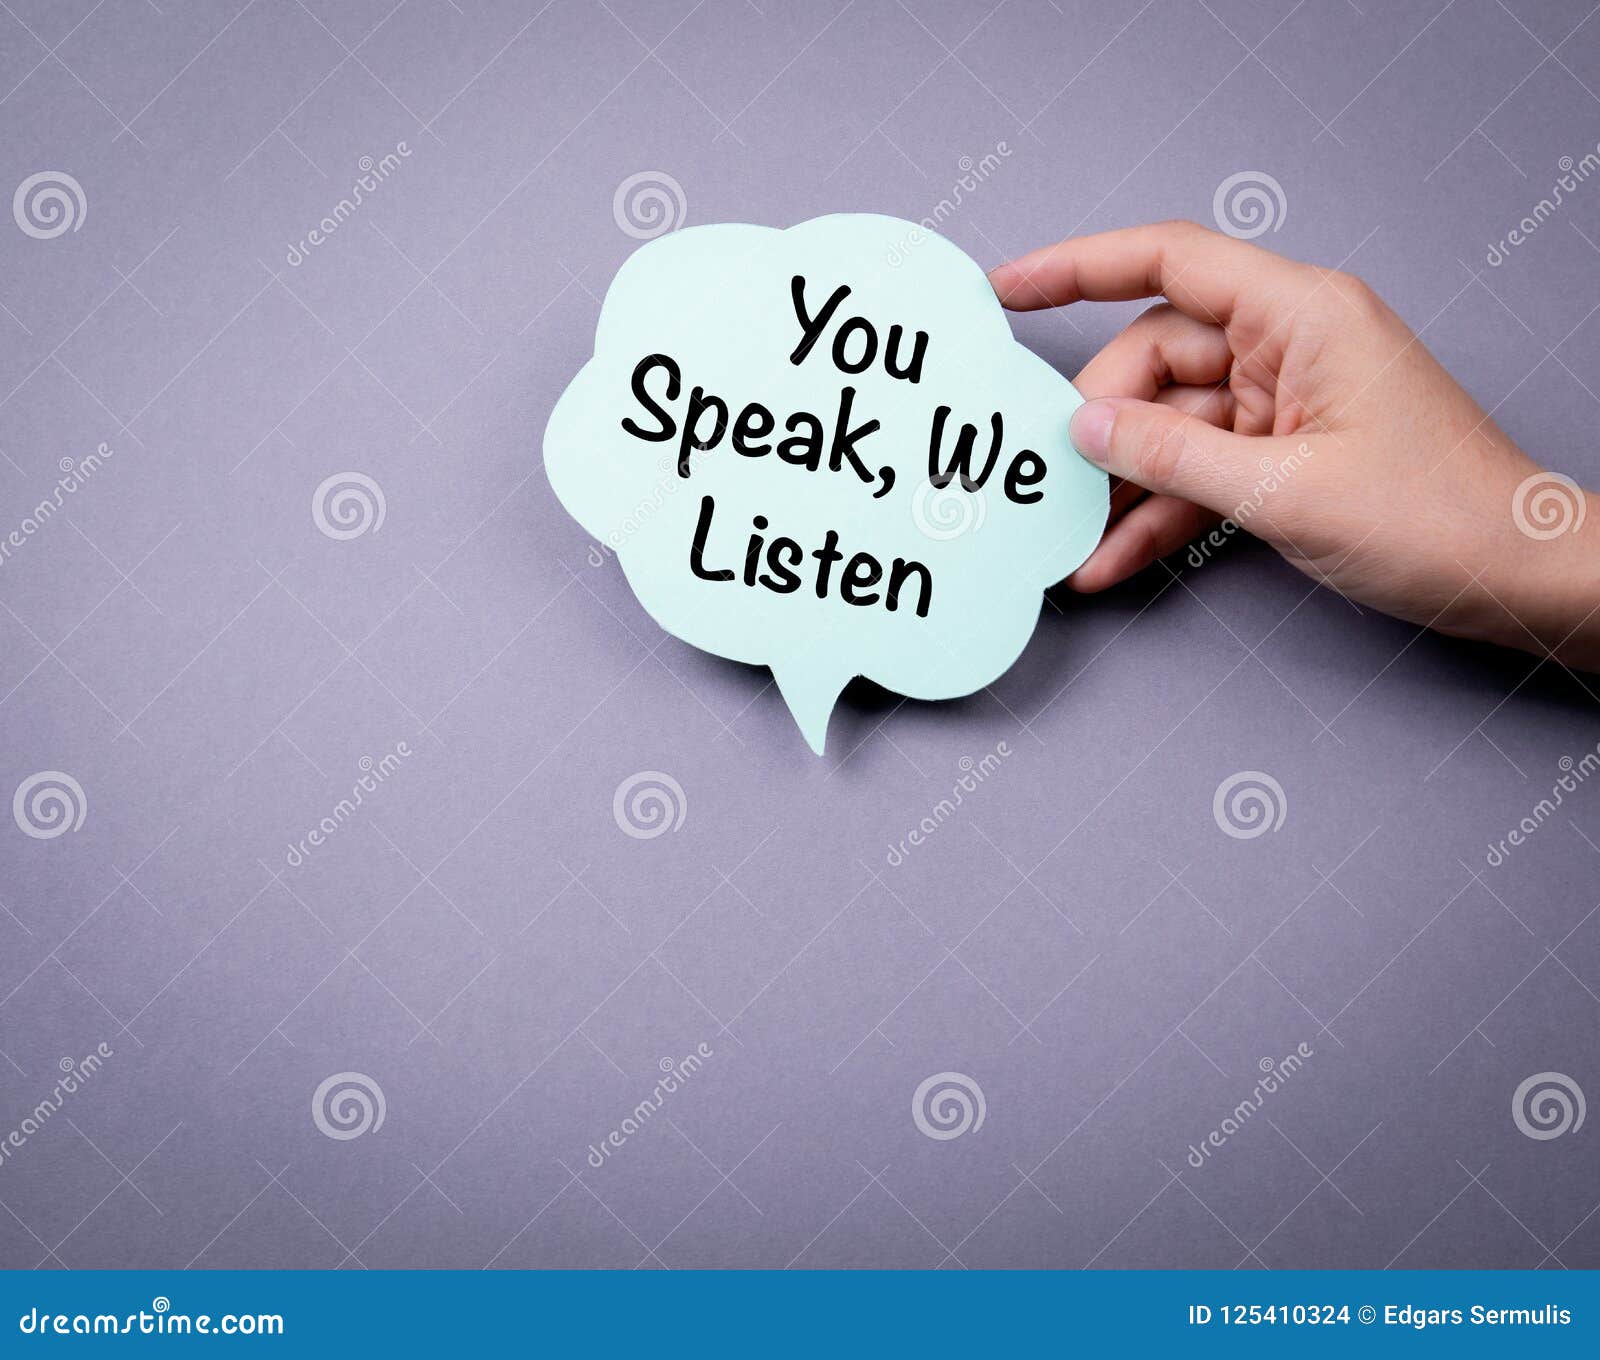 you speak, we listen